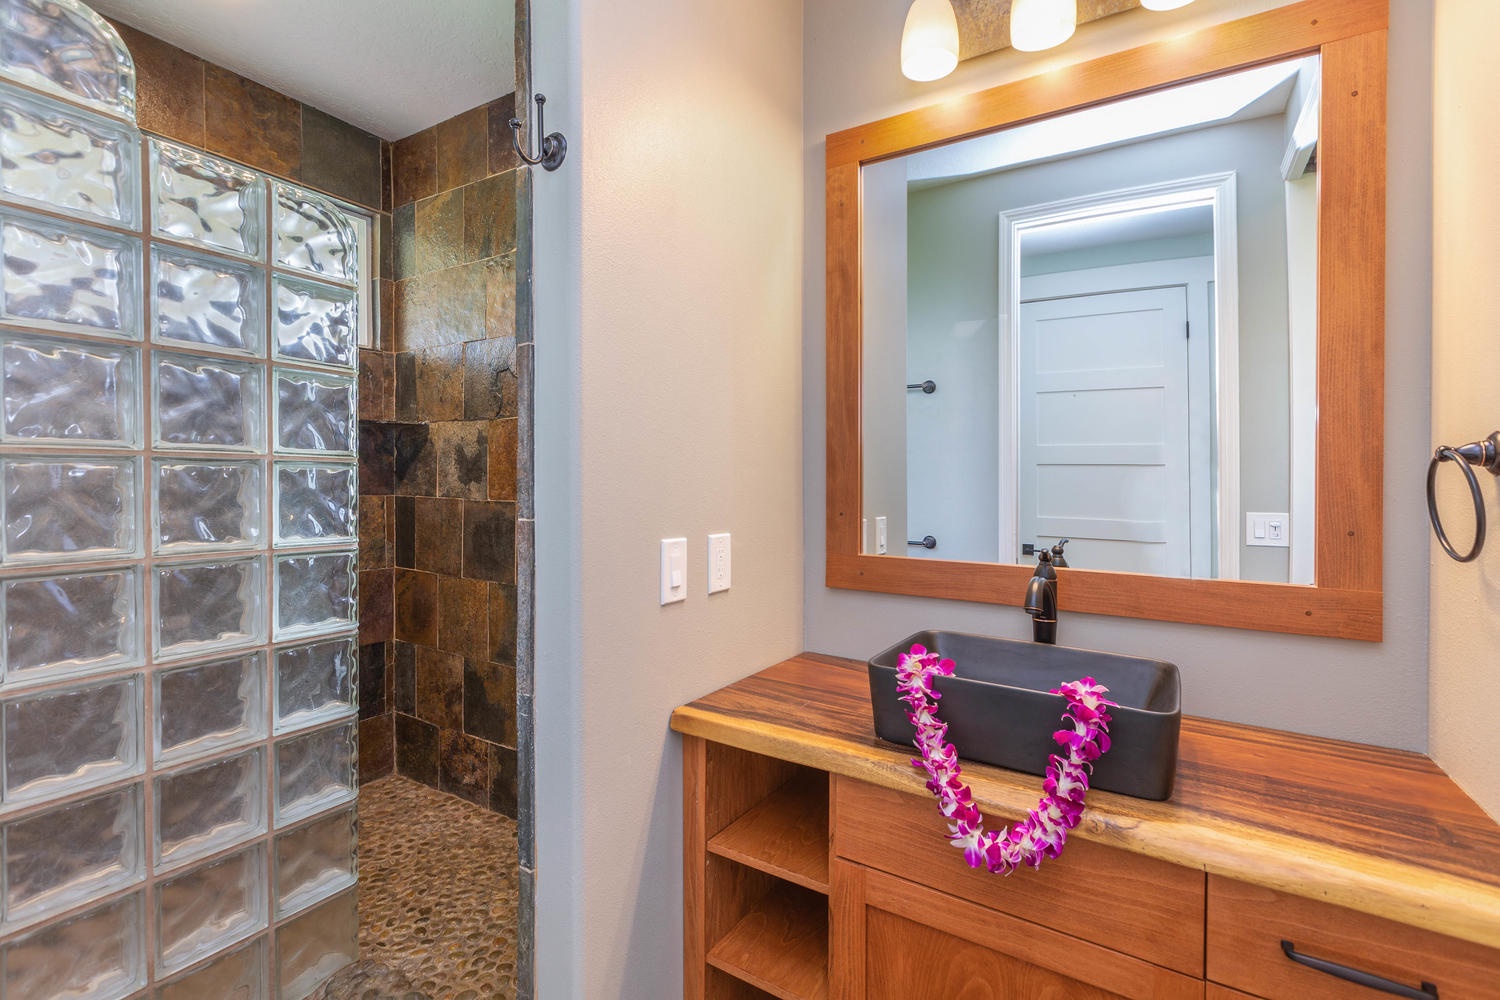 Princeville Vacation Rentals, Pohaku Villa - The shared upstair bathroom has separate shower and single vanity.